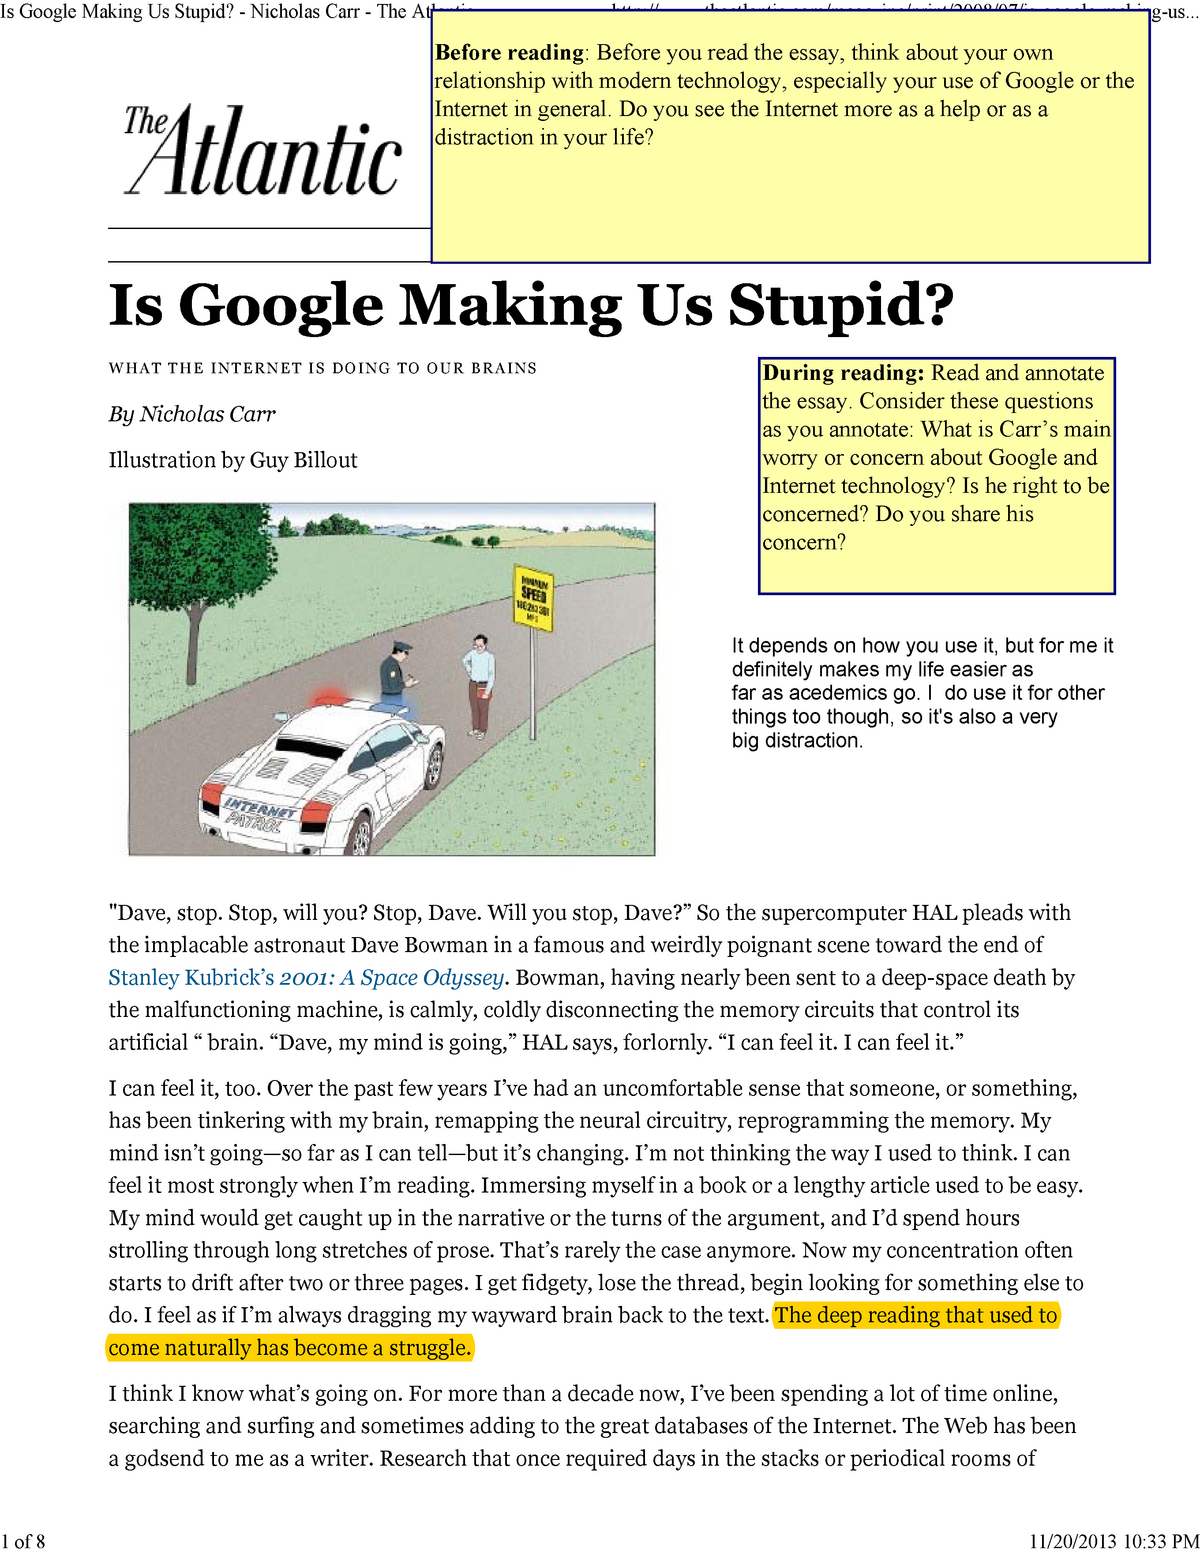 is google making us stupid essay examples